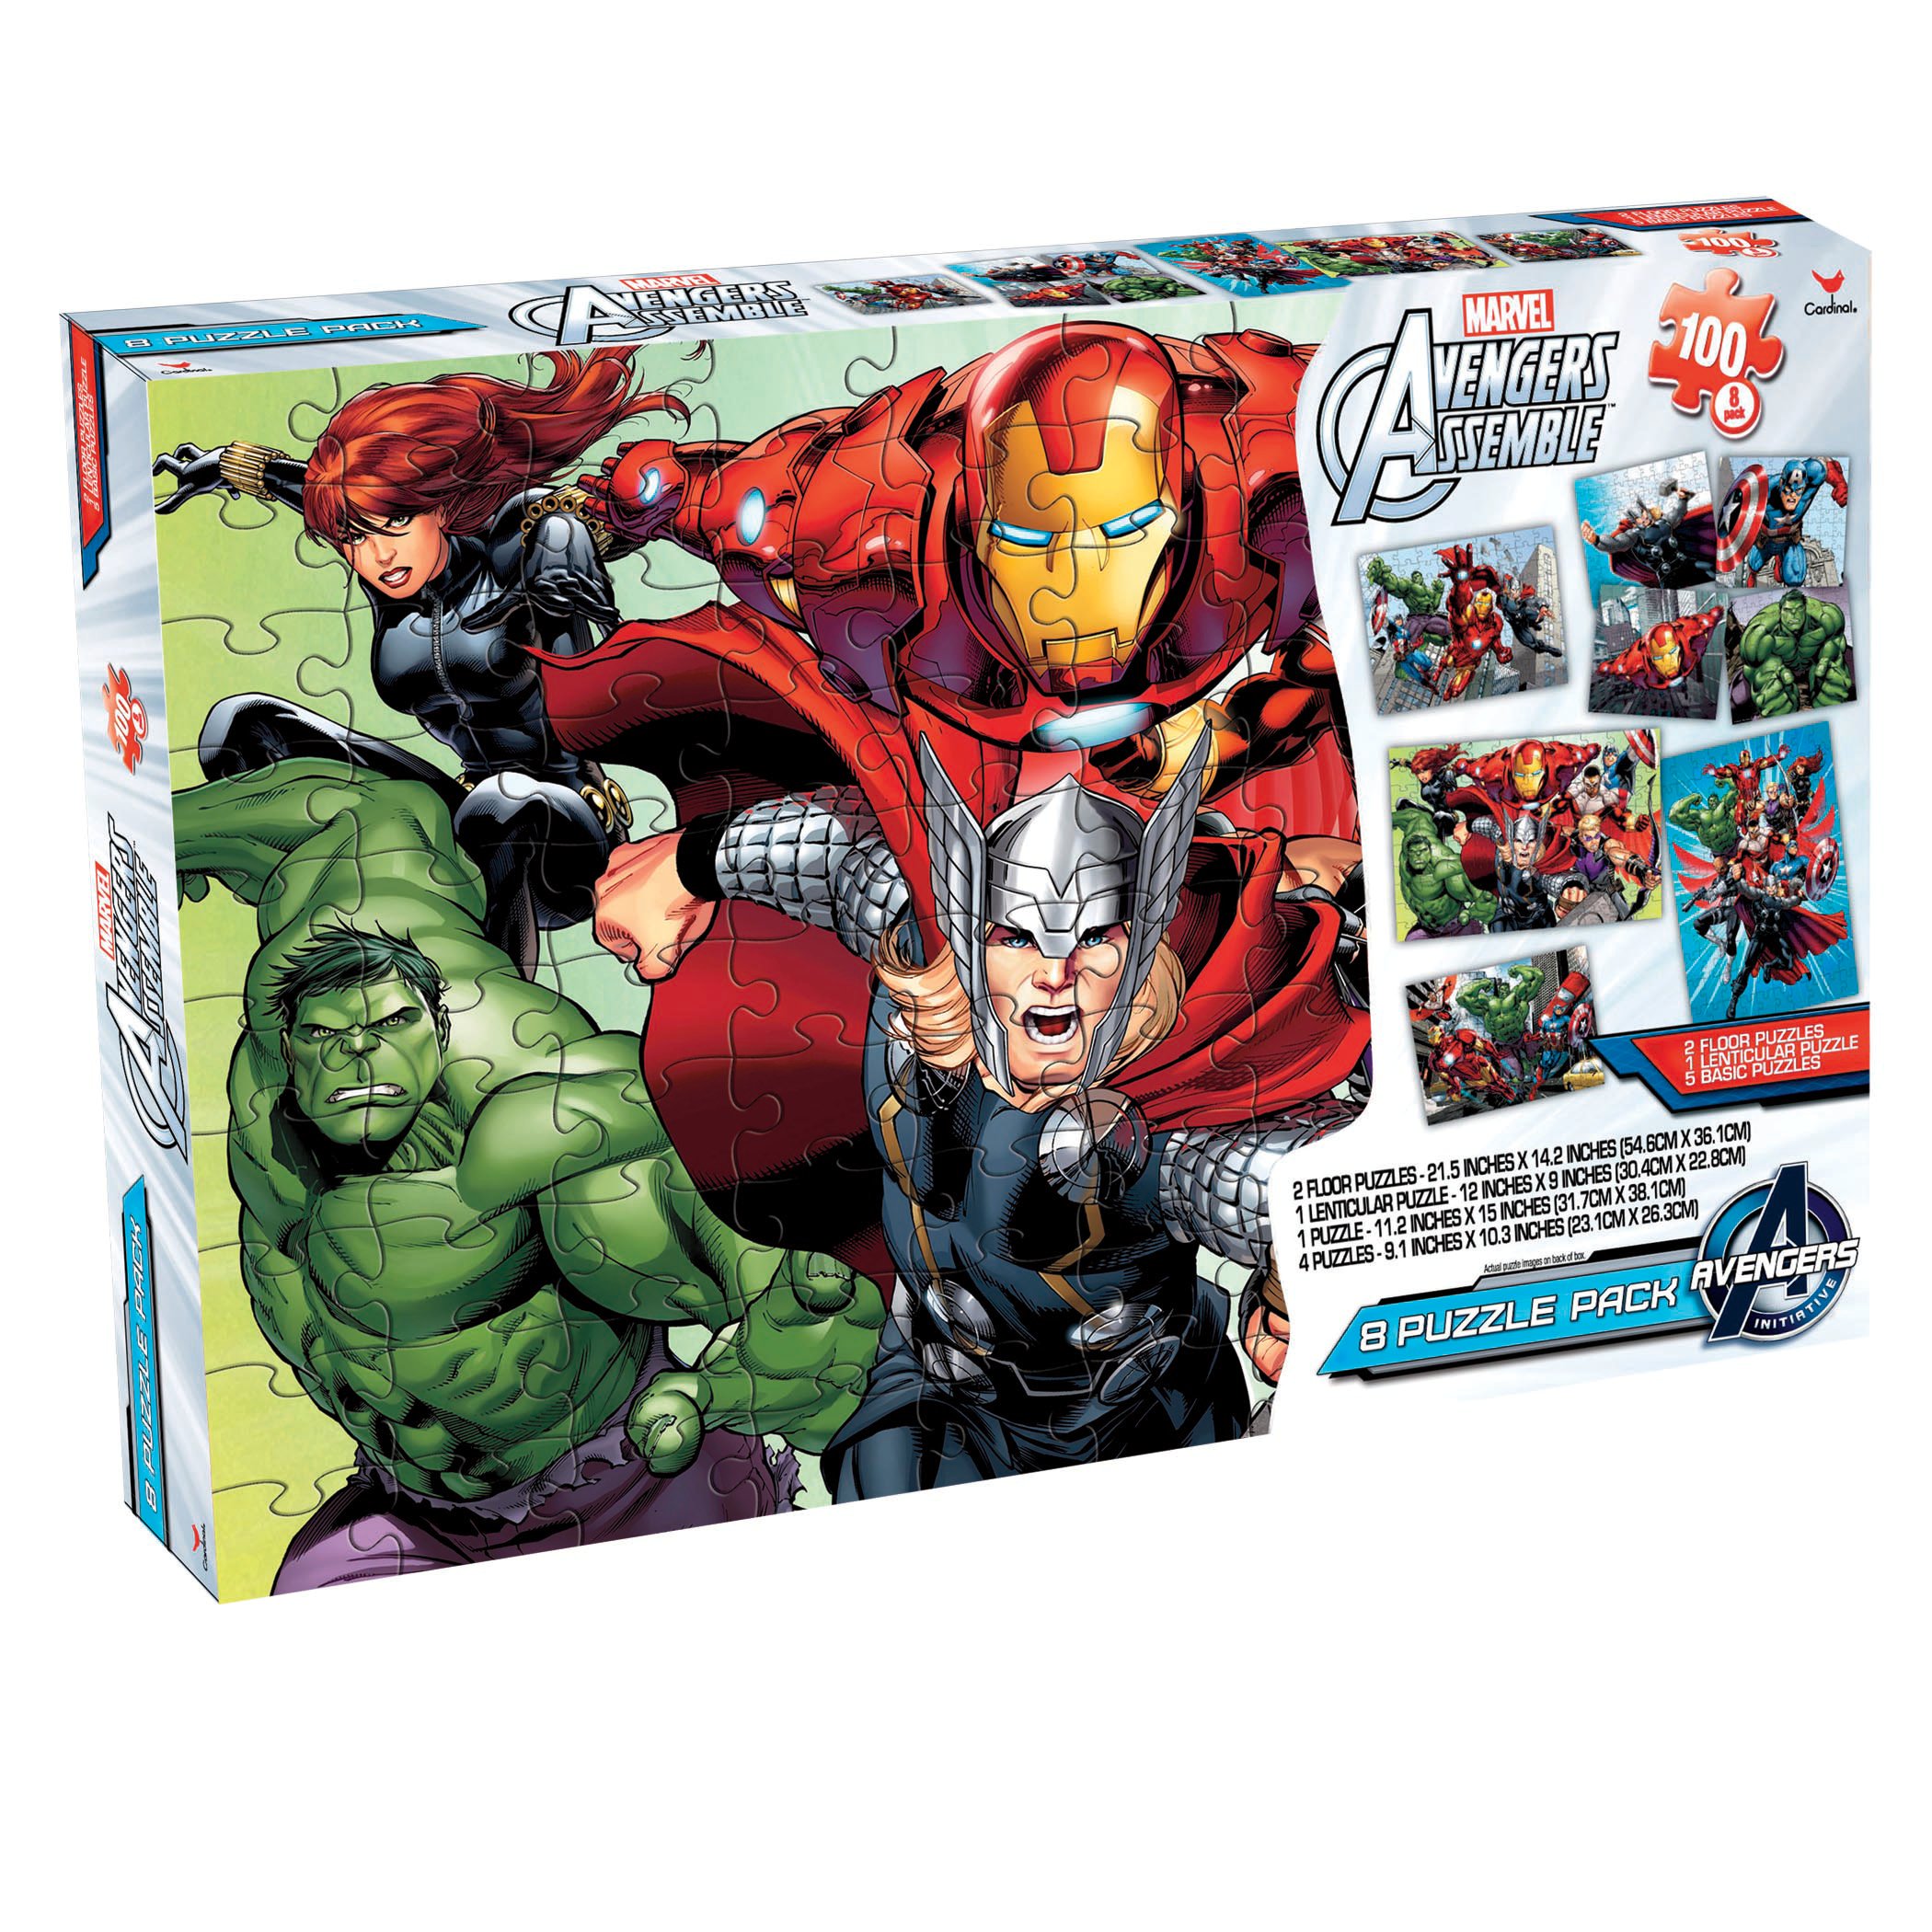 Cardinal Industries Marvel Avengers Assemble 100 Piece Puzzle Pack 